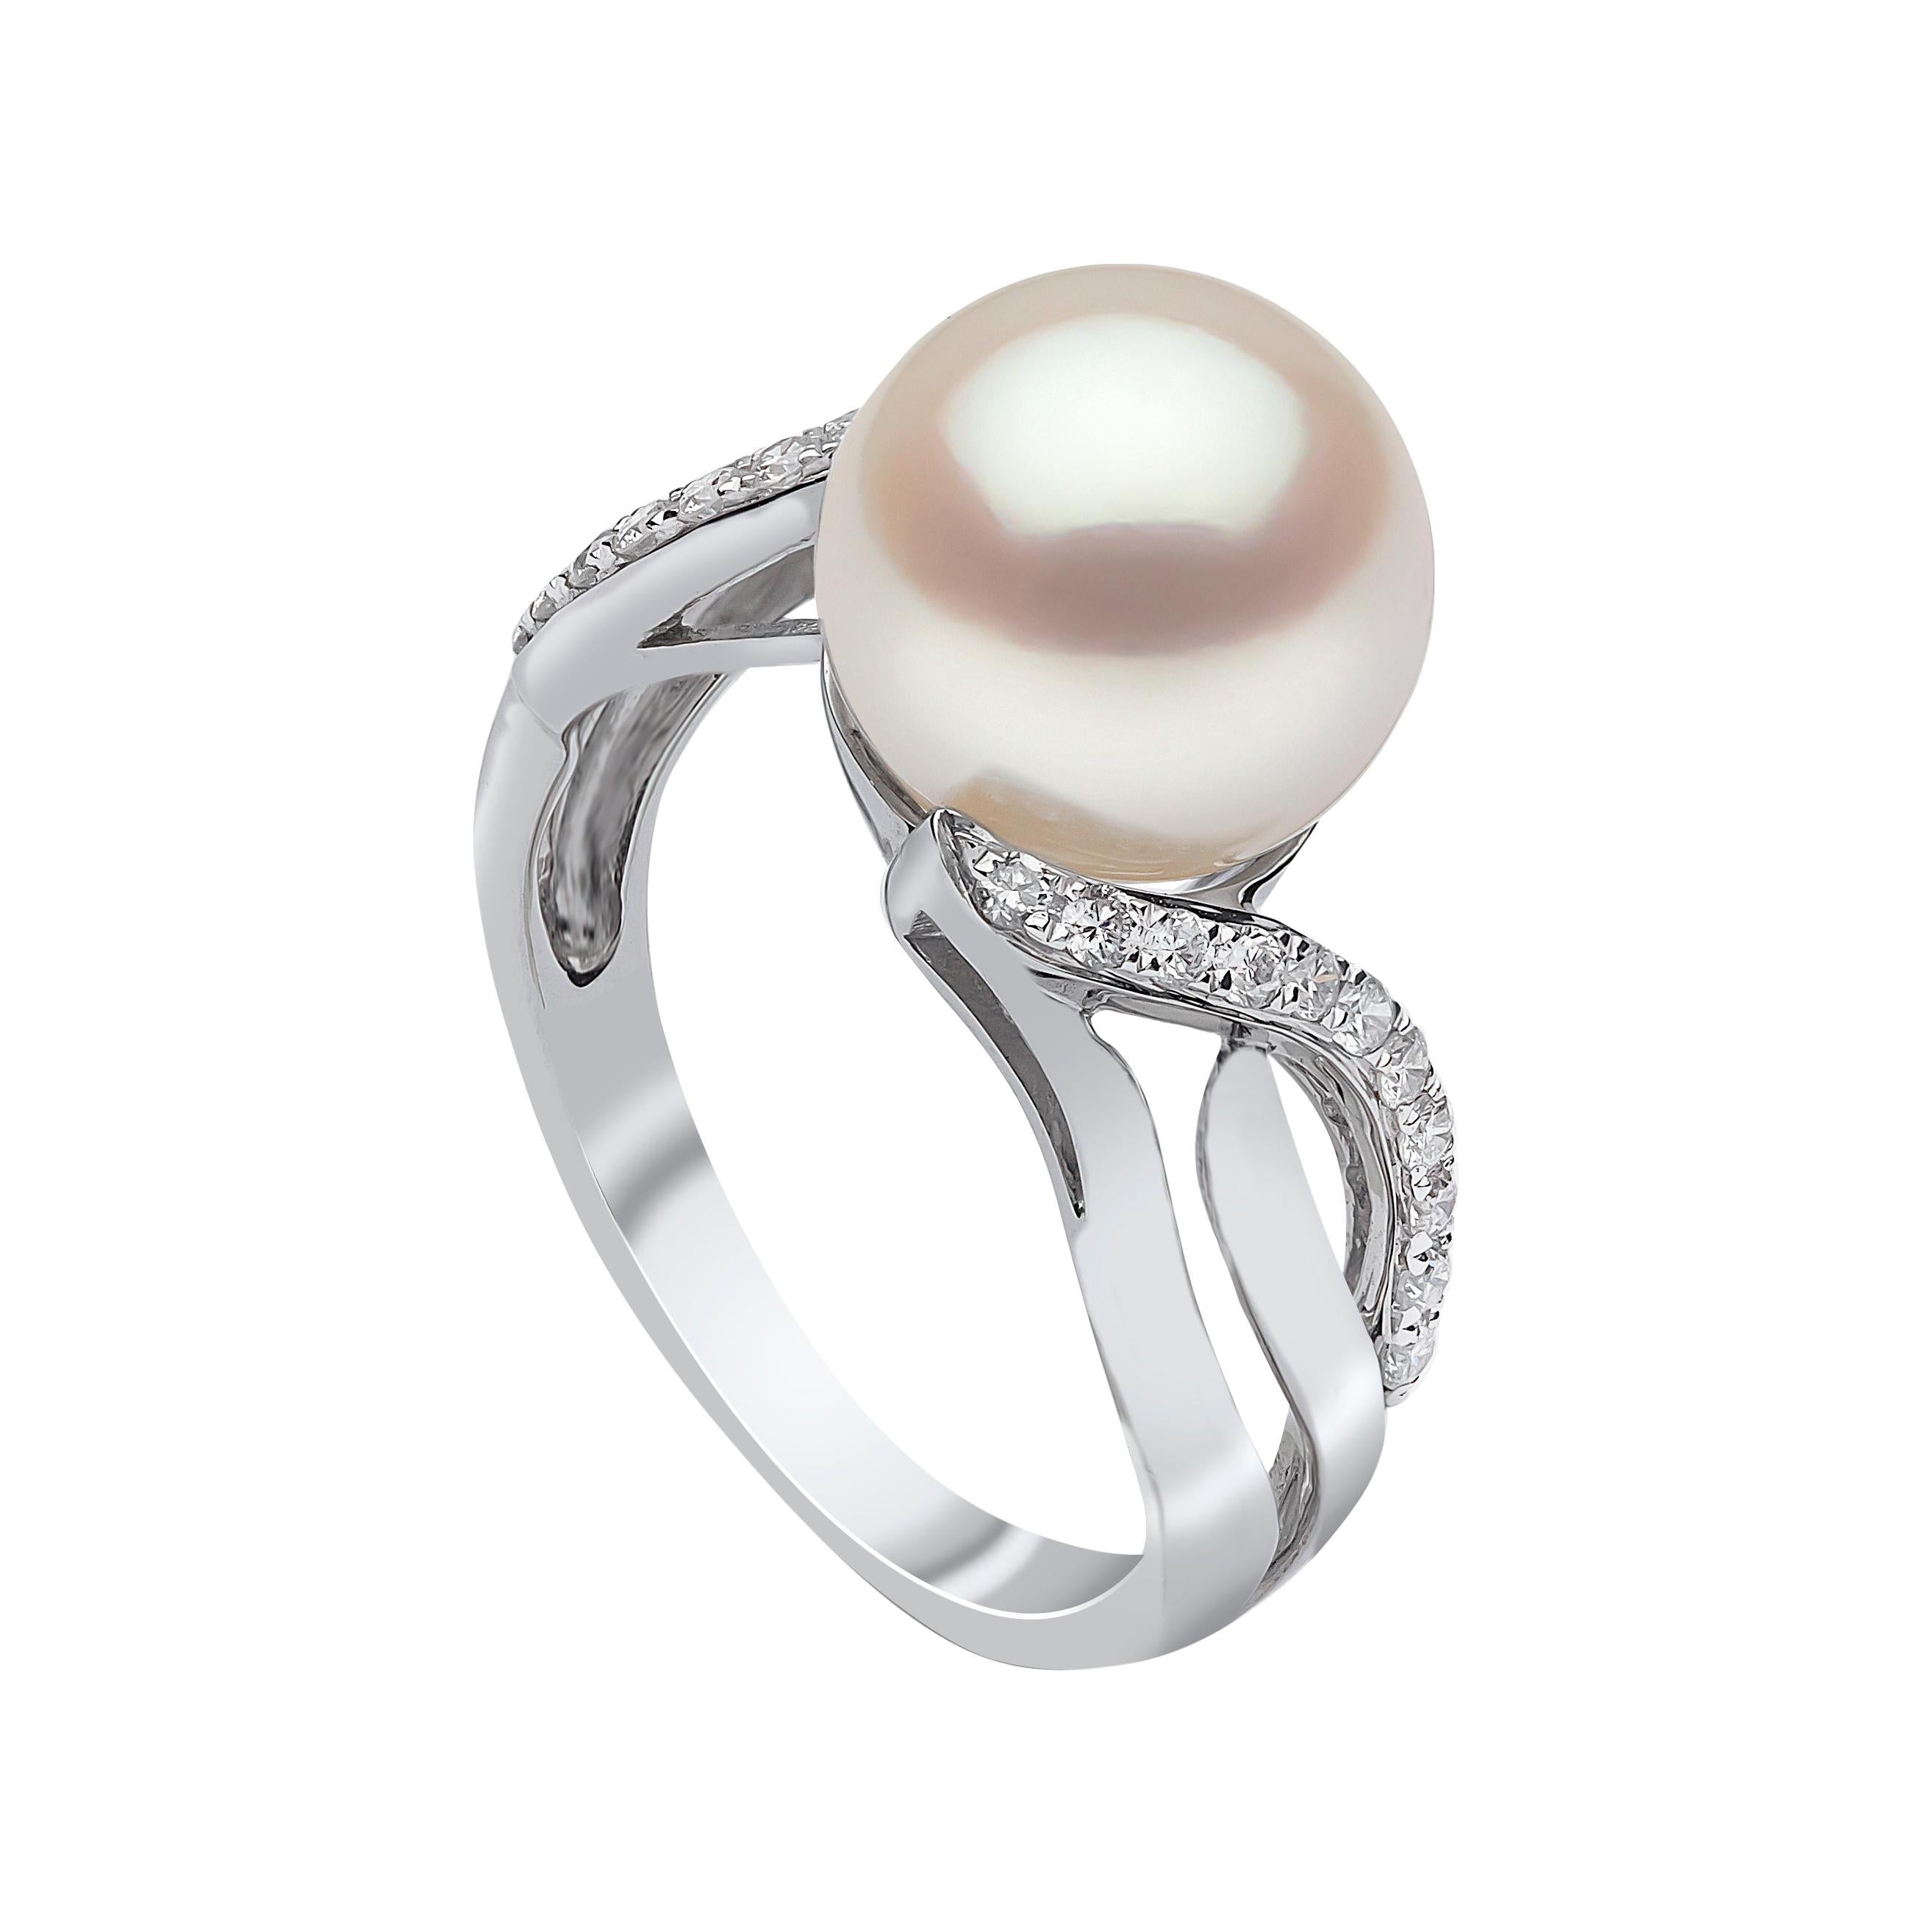 Yoko London Freshwater Pearl and Diamond Ring in 18k White Gold